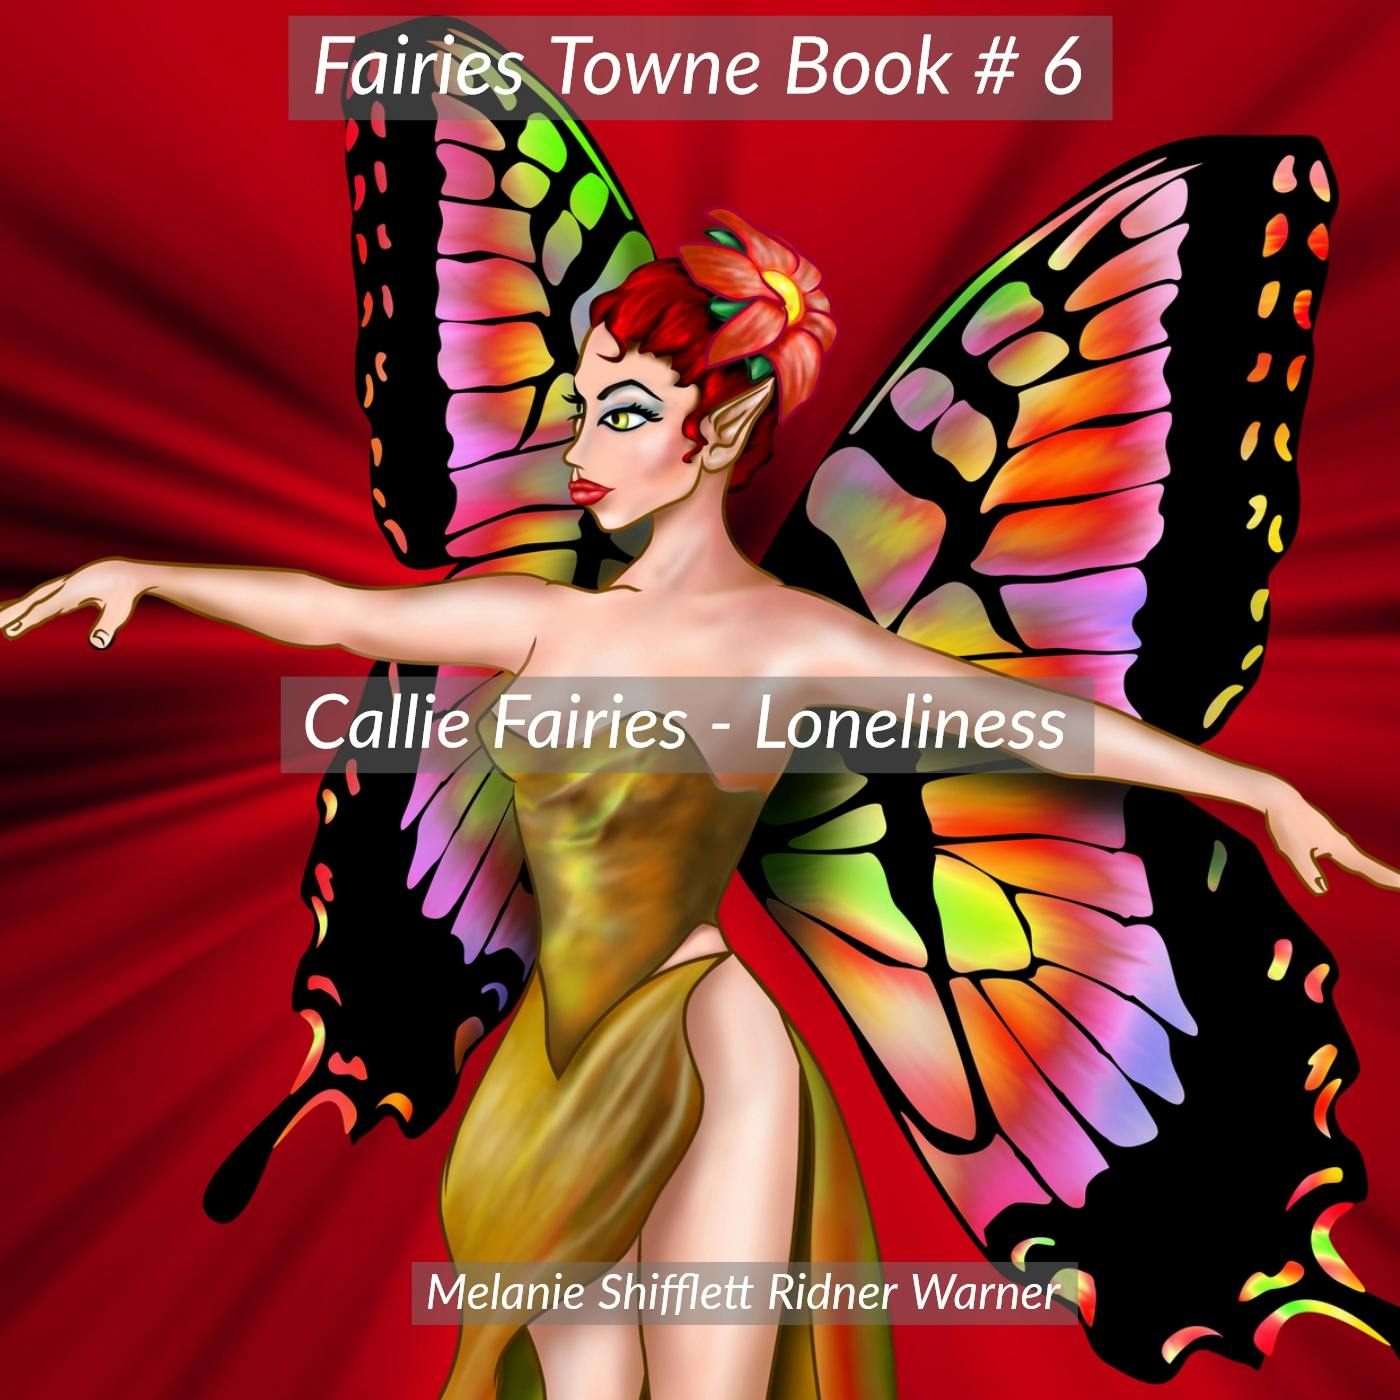 Callie Fairies: Loneliness - Melanie Shifflett Ridner Warner